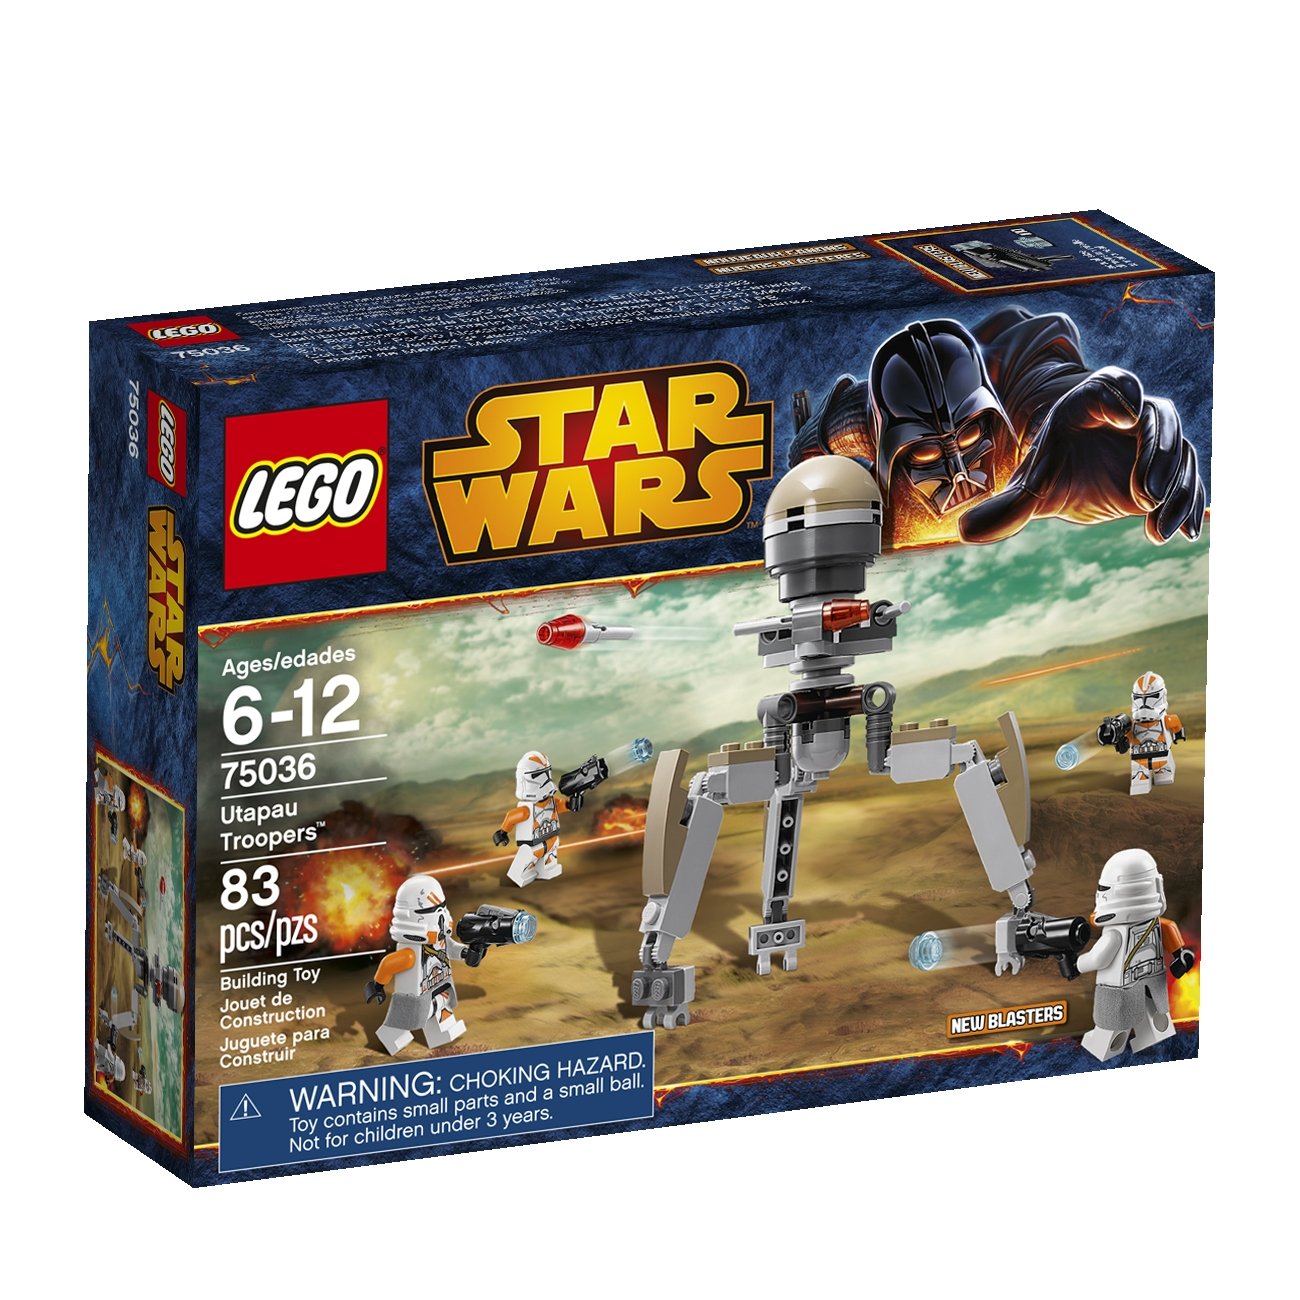 Utapau Troopers Lego® Star Wars Set 75036